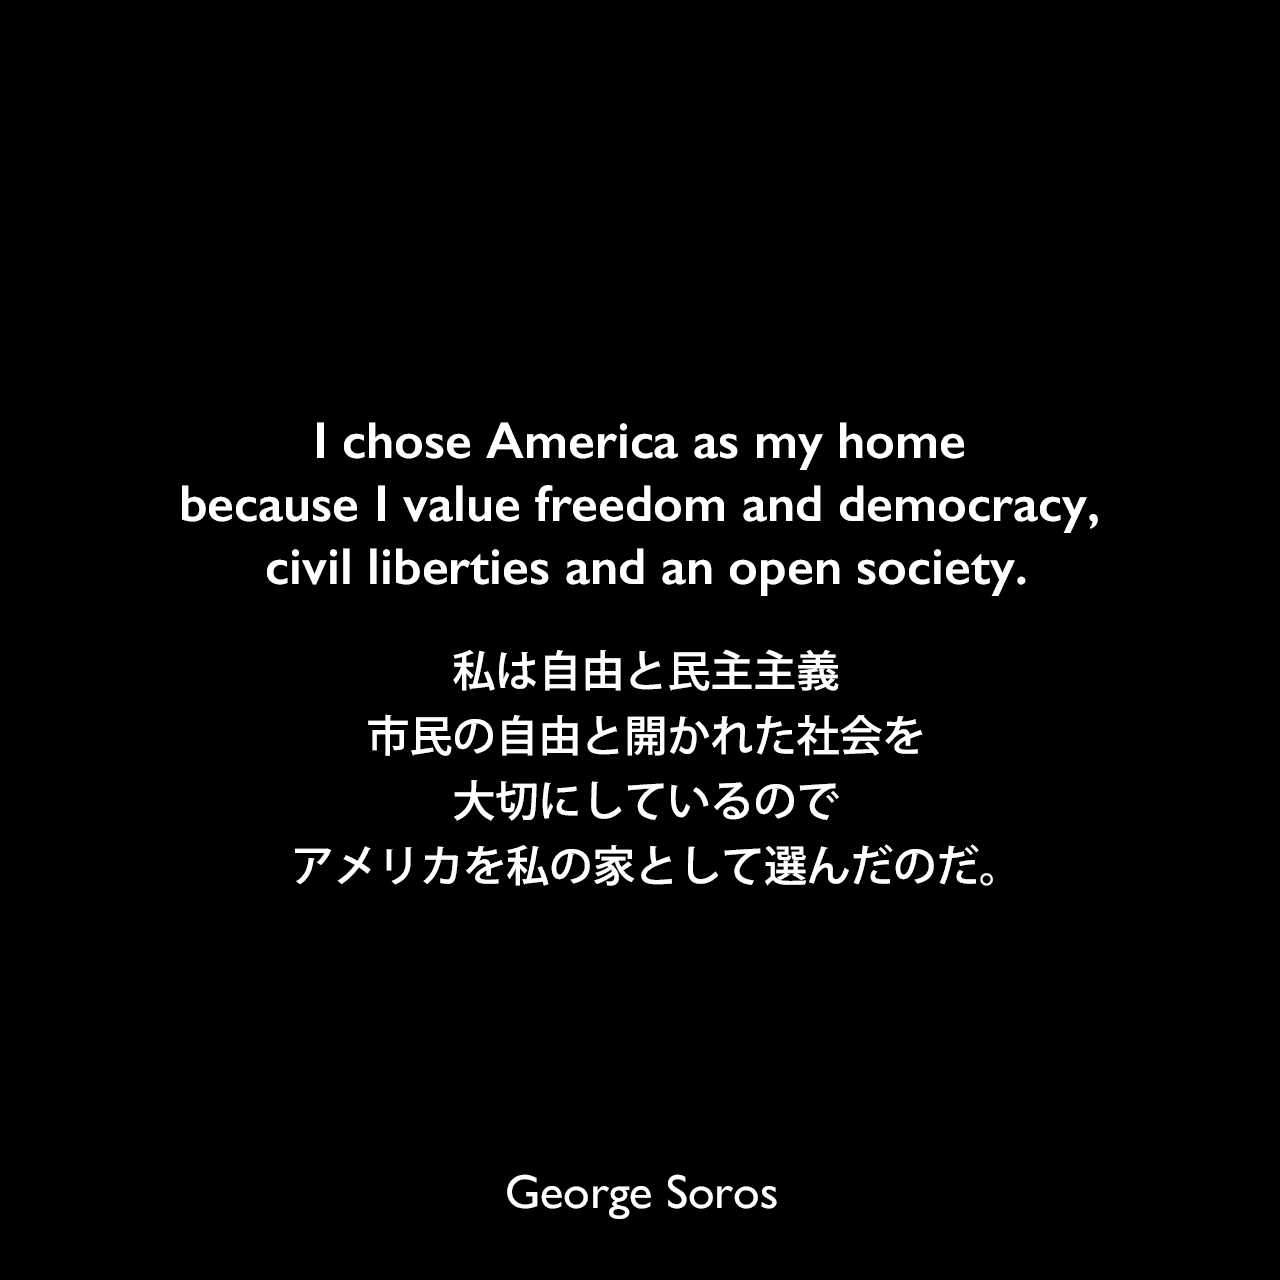 I chose America as my home because I value freedom and democracy, civil liberties and an open society.私は自由と民主主義、市民の自由と開かれた社会を大切にしているので、アメリカを私の家として選んだのだ。George Soros